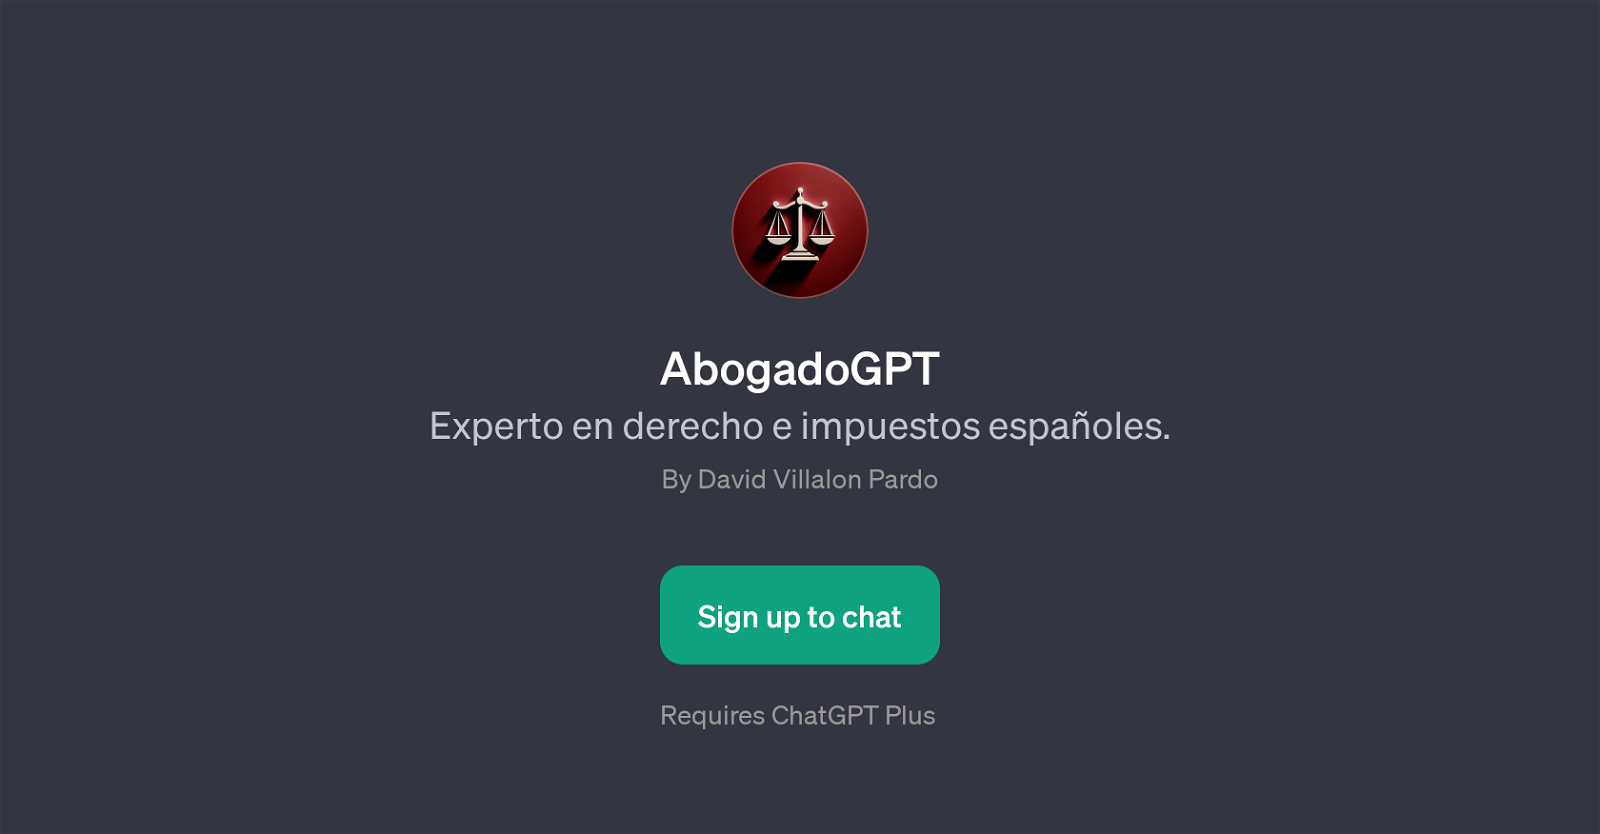 AbogadoGPT website